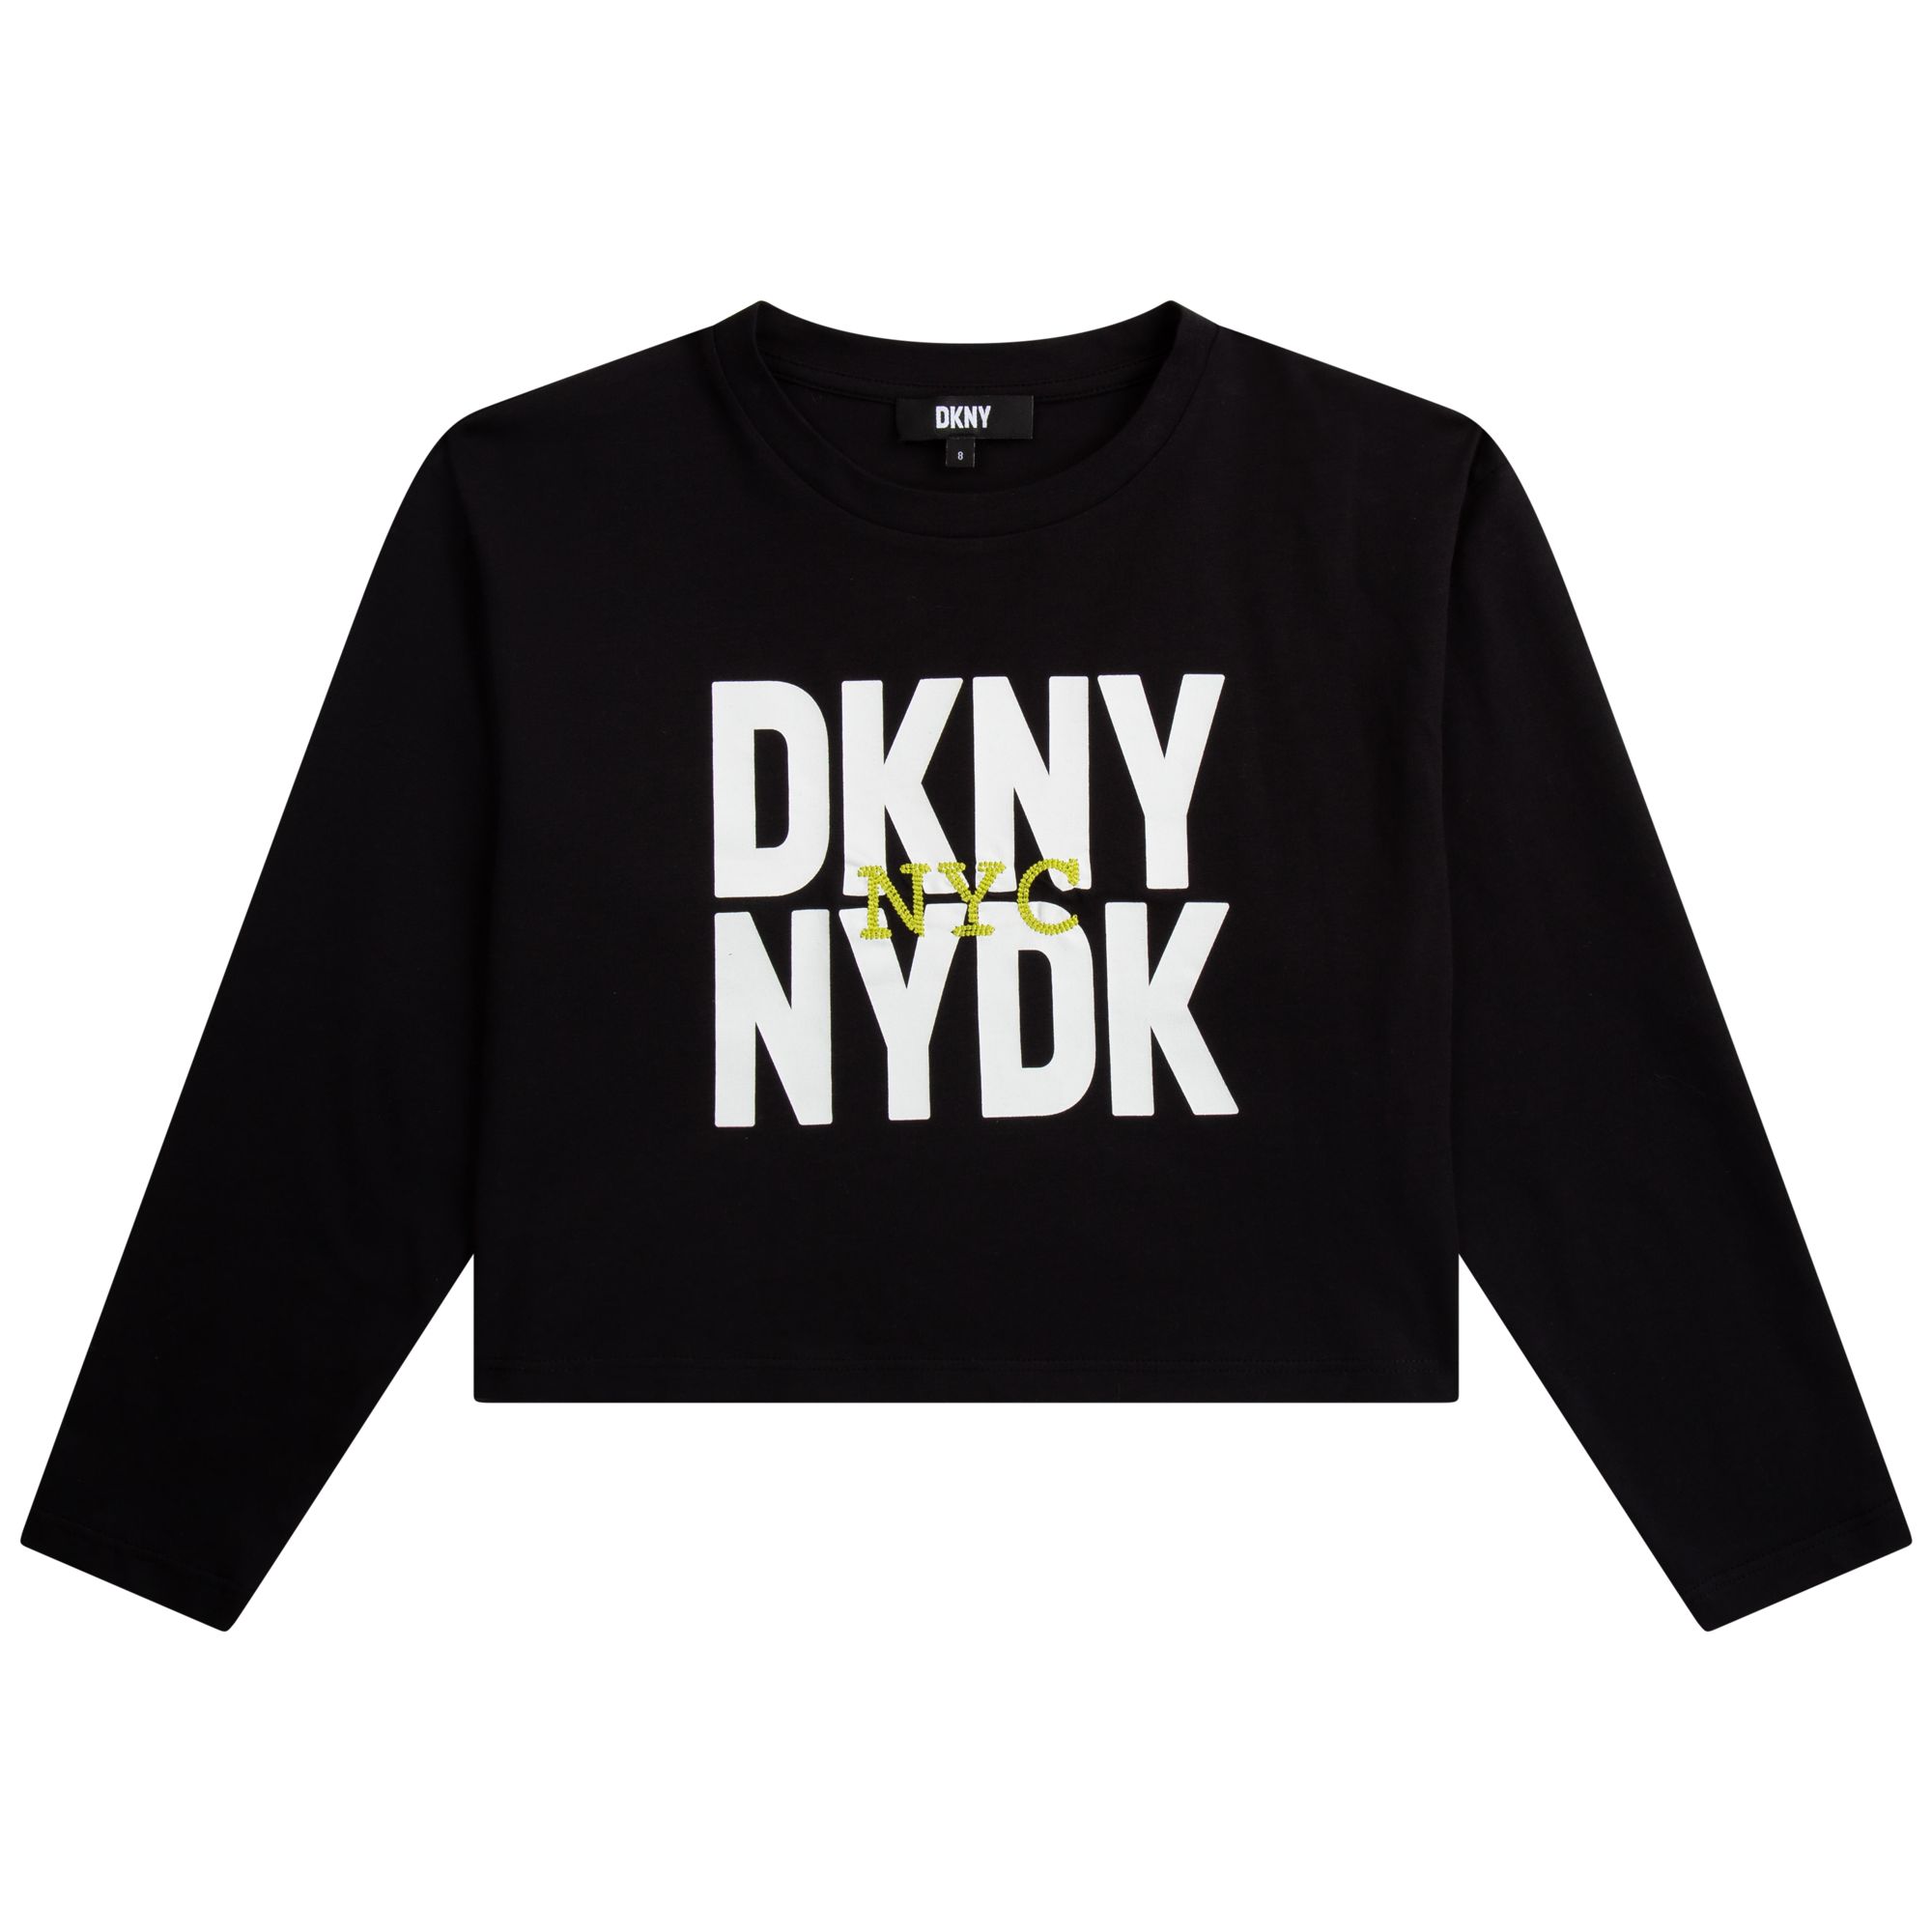 T-shirt ampia con stampa DKNY Per BAMBINA